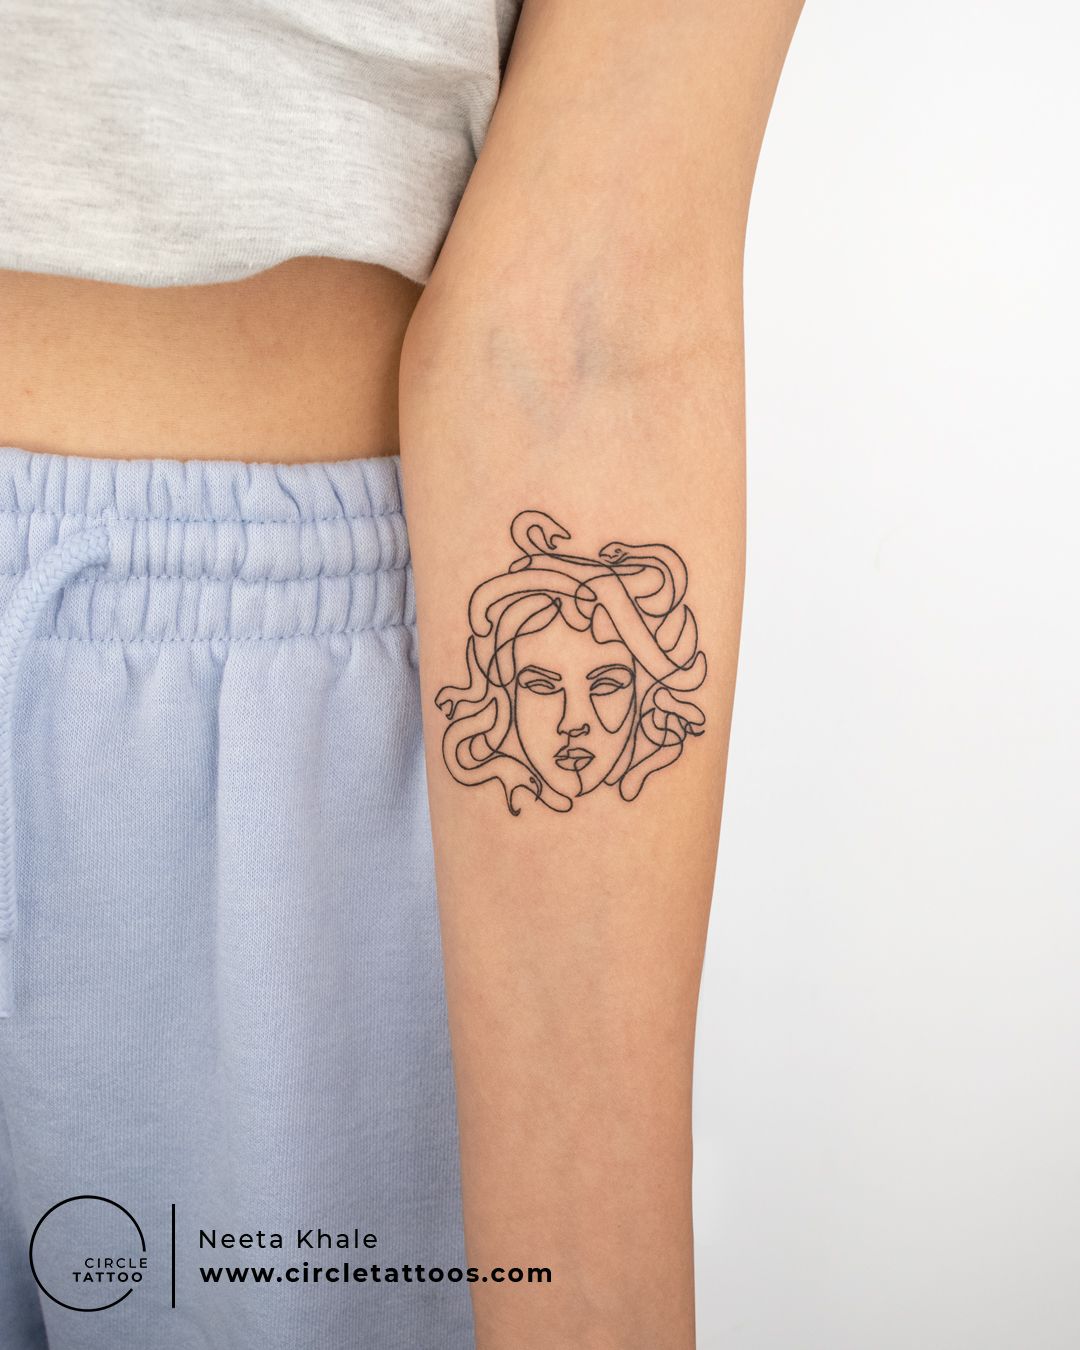 43 Phenomenal Medusa Tattoo Designs For This Year